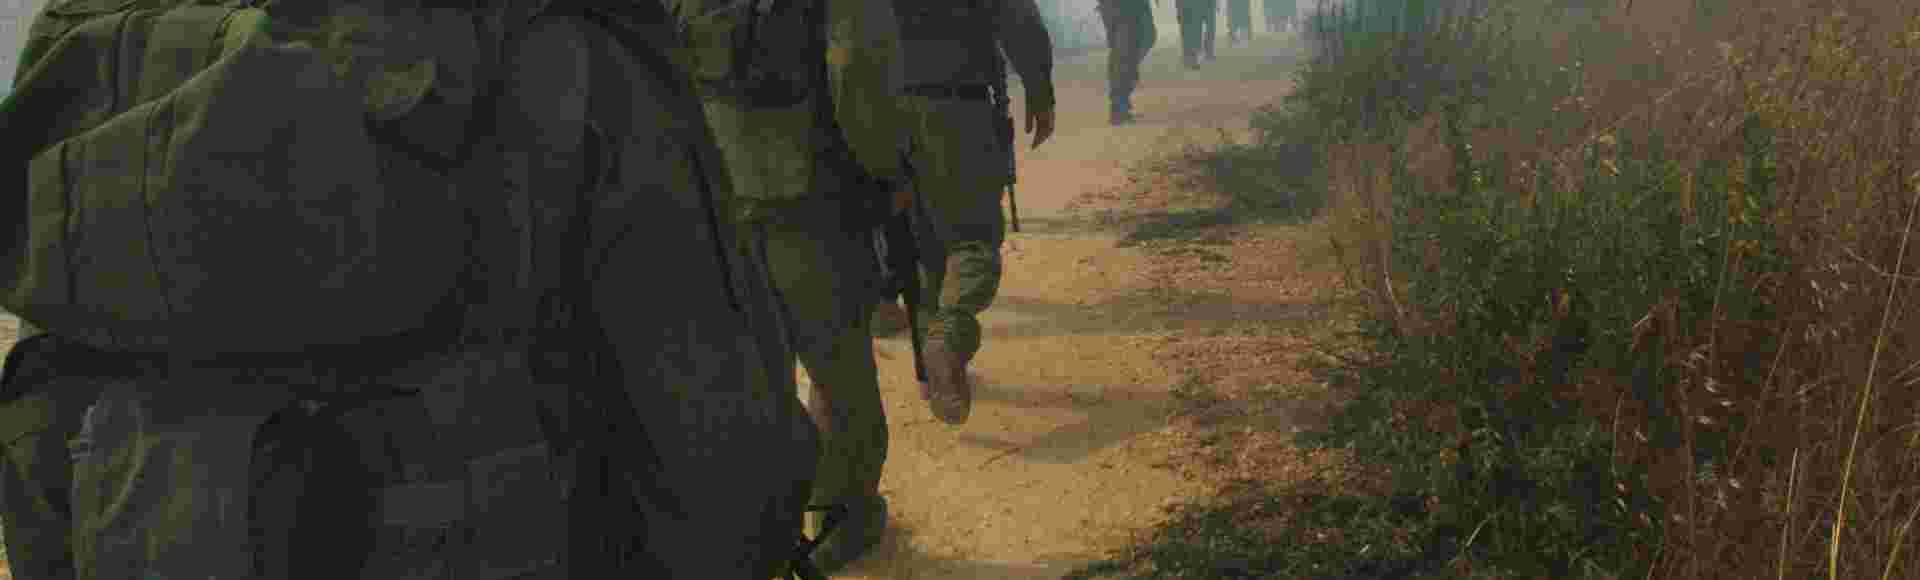 Israeli soldiers advance towards southern Lebanon near the northern Israeli village of Avivim in 2006.